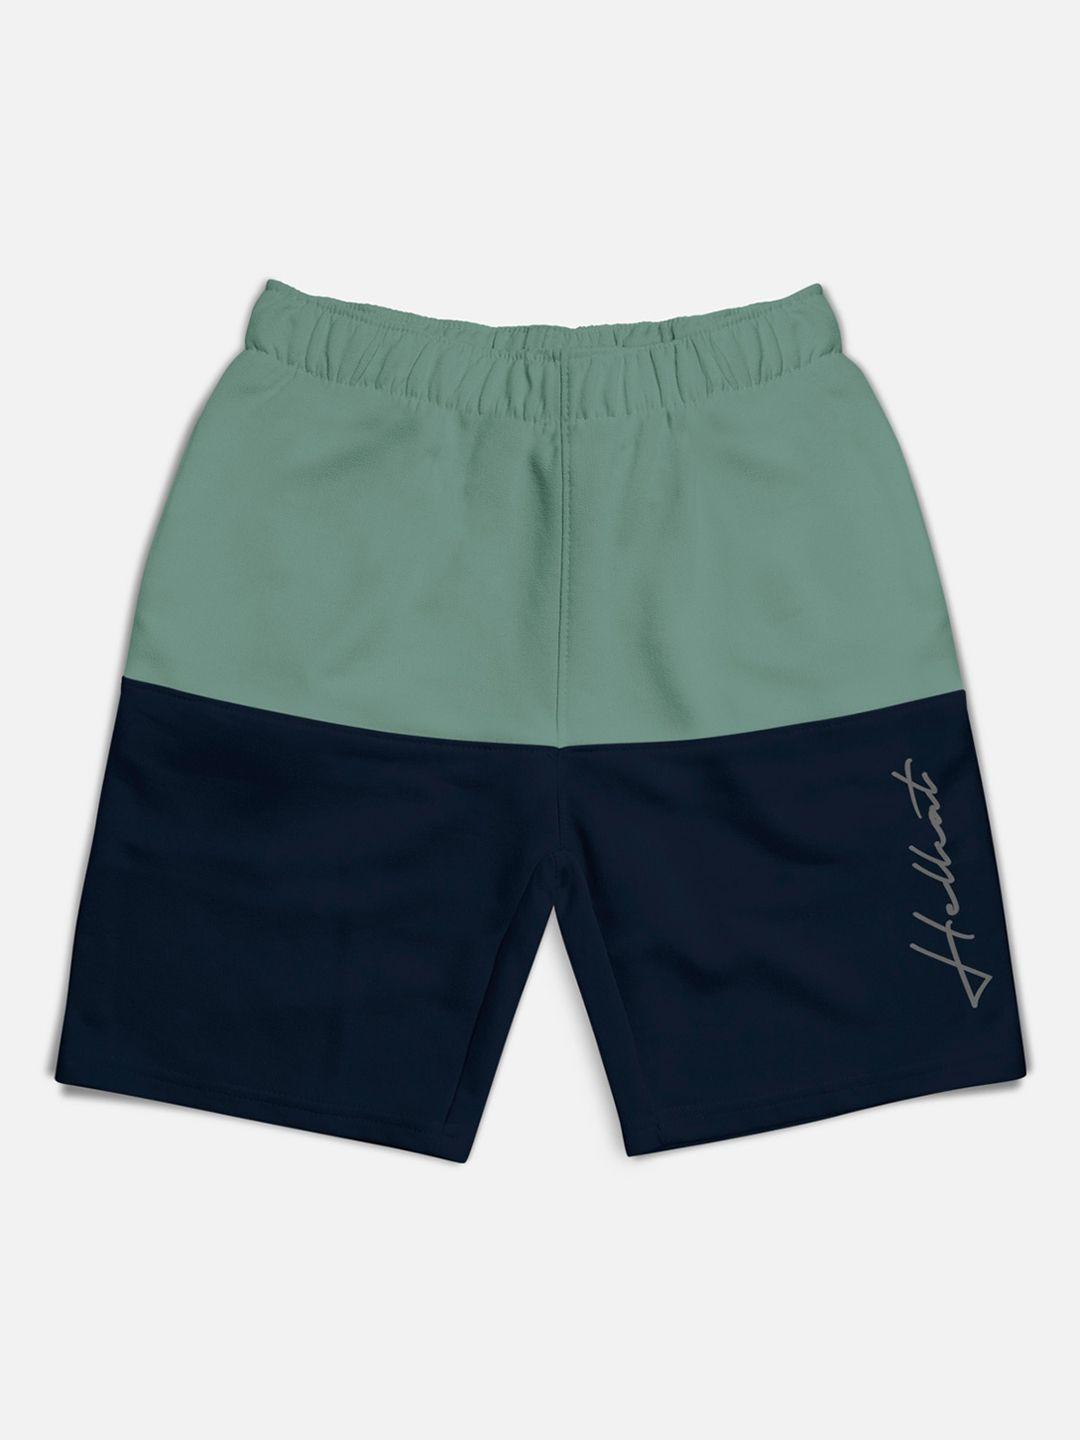 hellcat-boys-mid-rise-colorblocked-cotton-sports-shorts